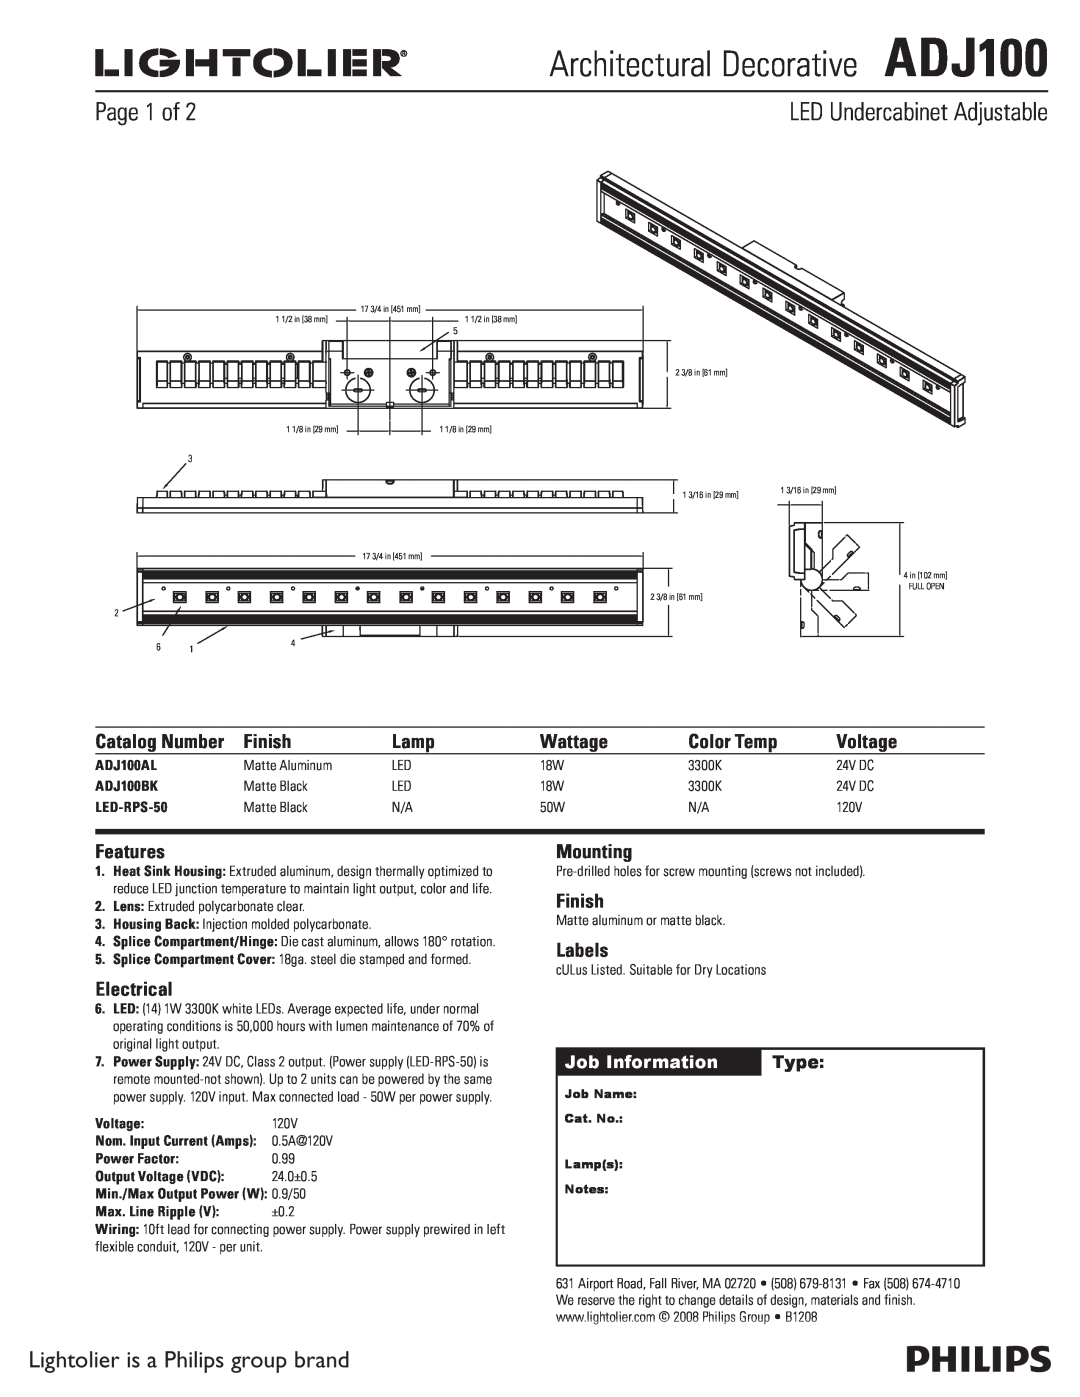 Lightolier ADJ100BK manual LED Undercabinet Adjustable, Page 1 of, Lightolier is a Philips group brand, Finish, Lamp 